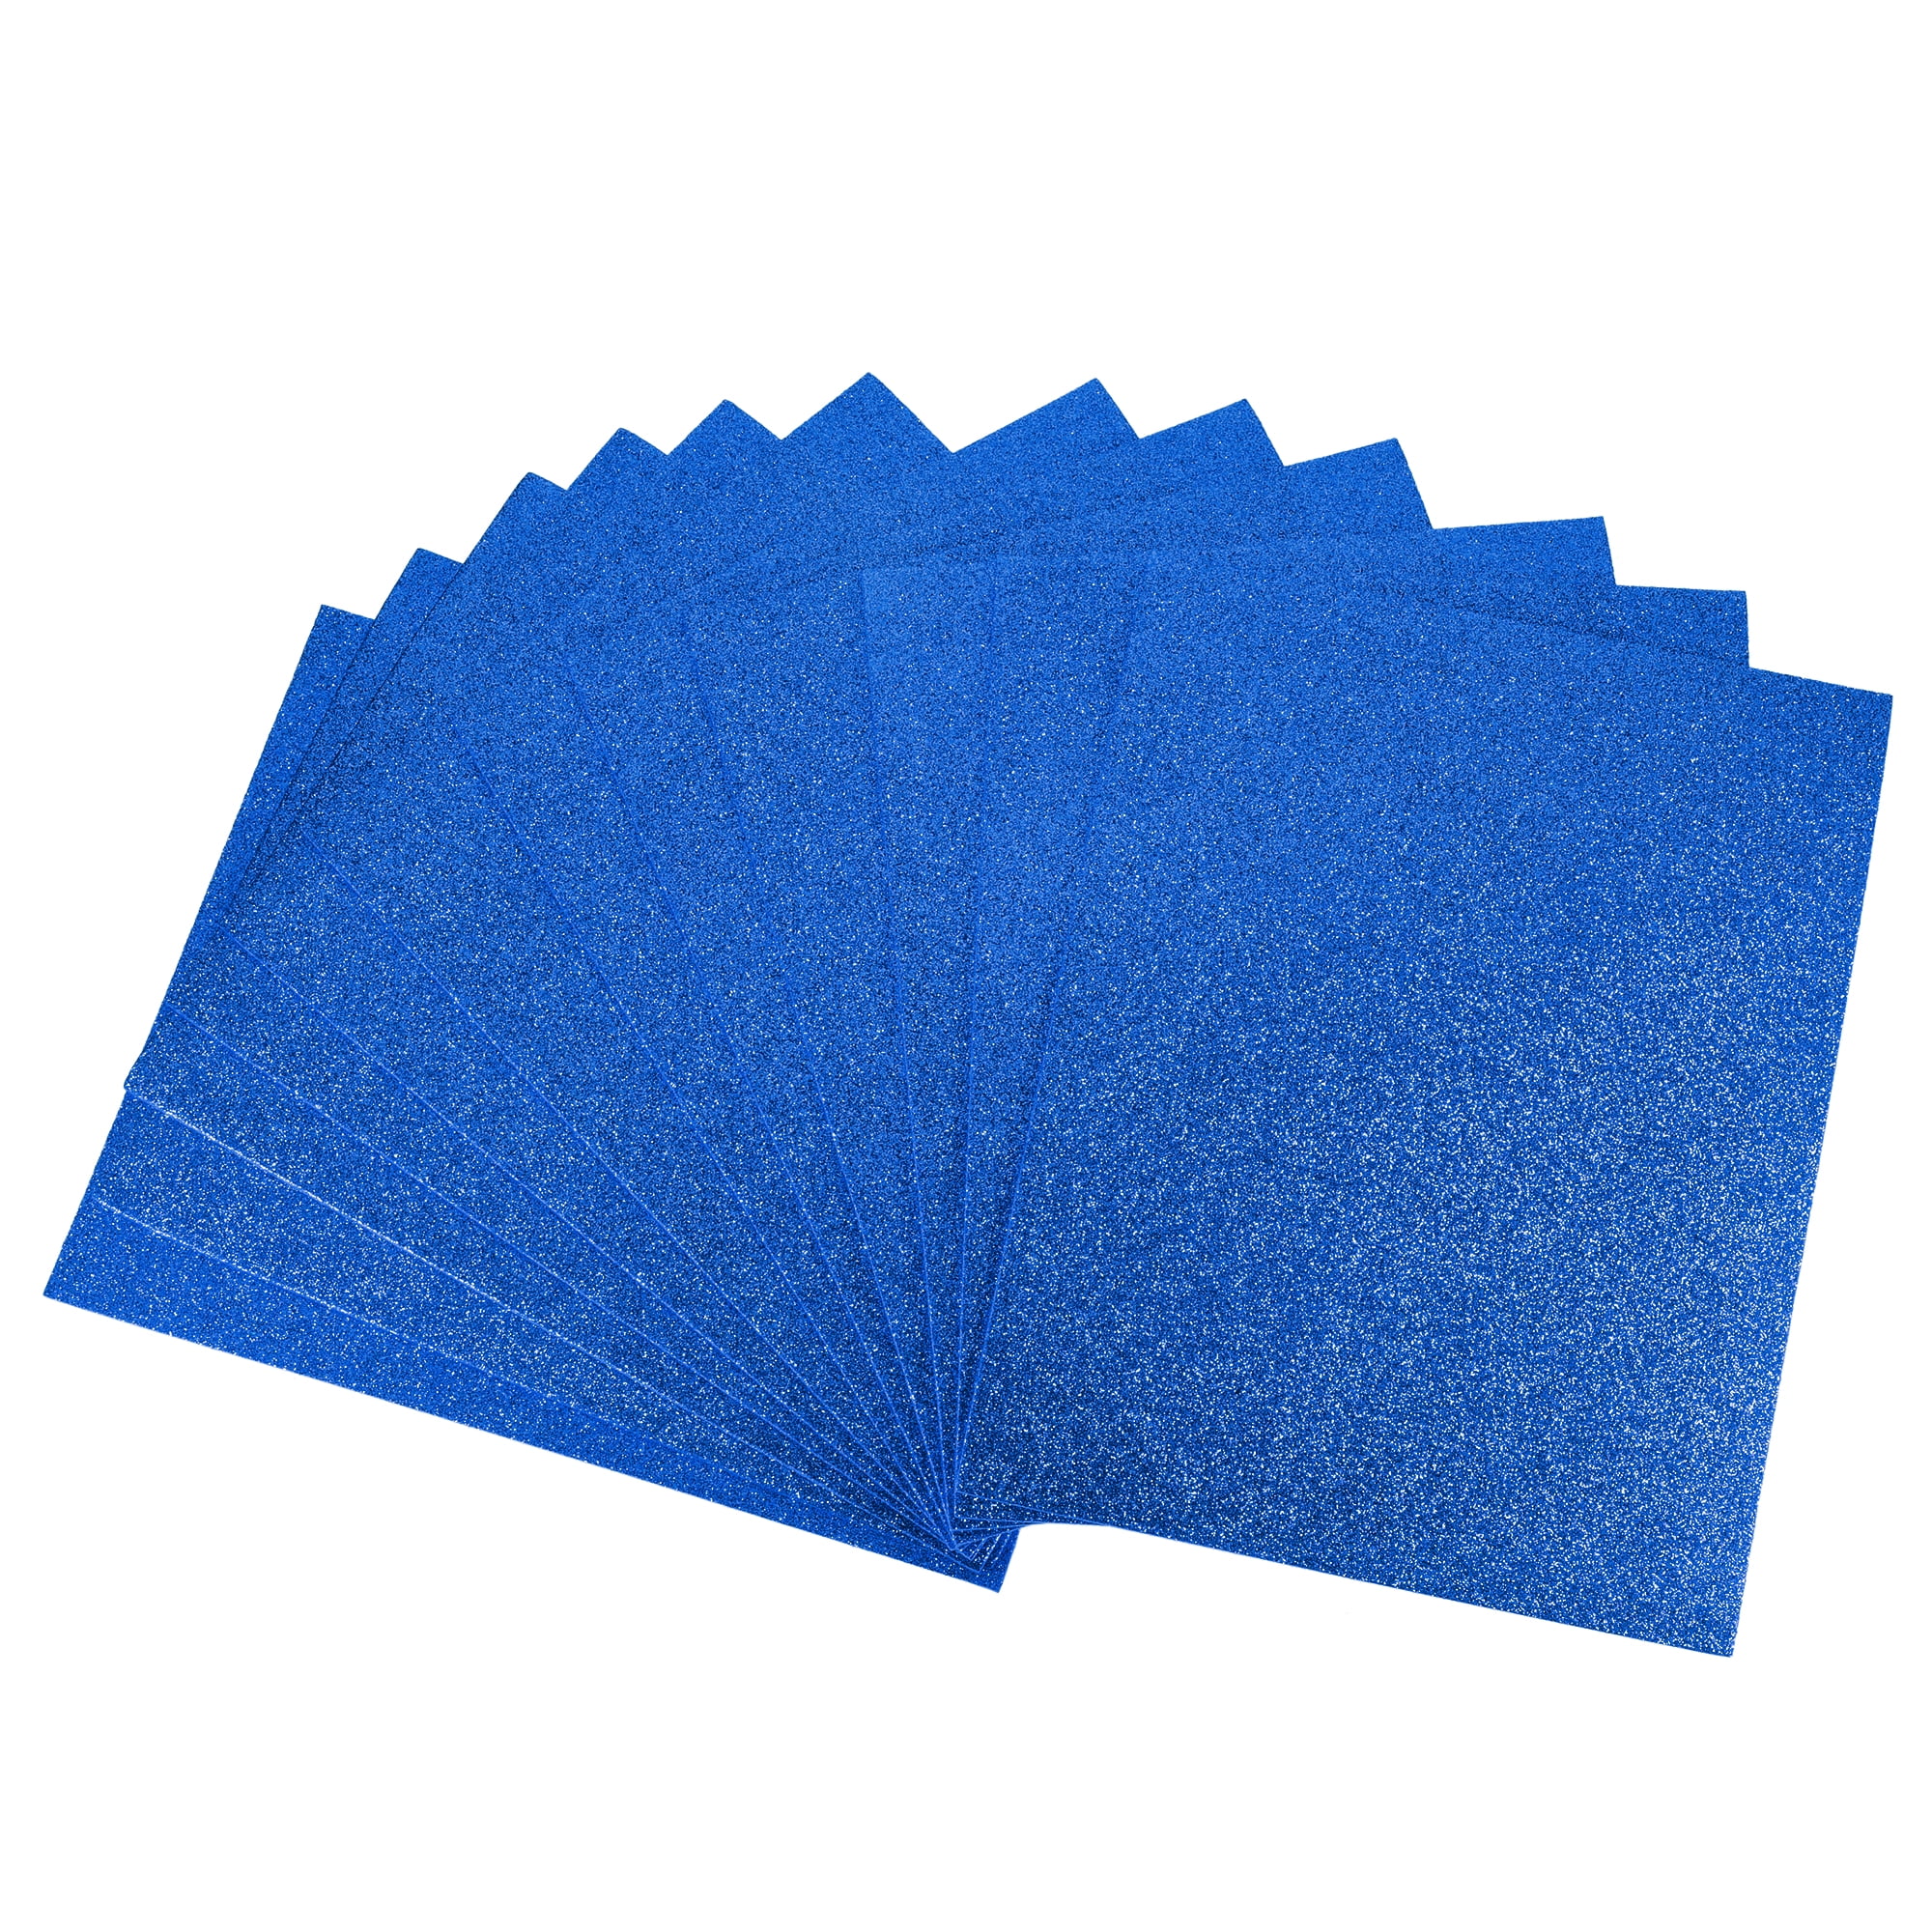 20 PCS EVA Foam Sheets DIY Handcraft Materials 1mm Thick 15.7 x 11.8 Inches  Blue EVA Foam Papers for Arts and Crafts